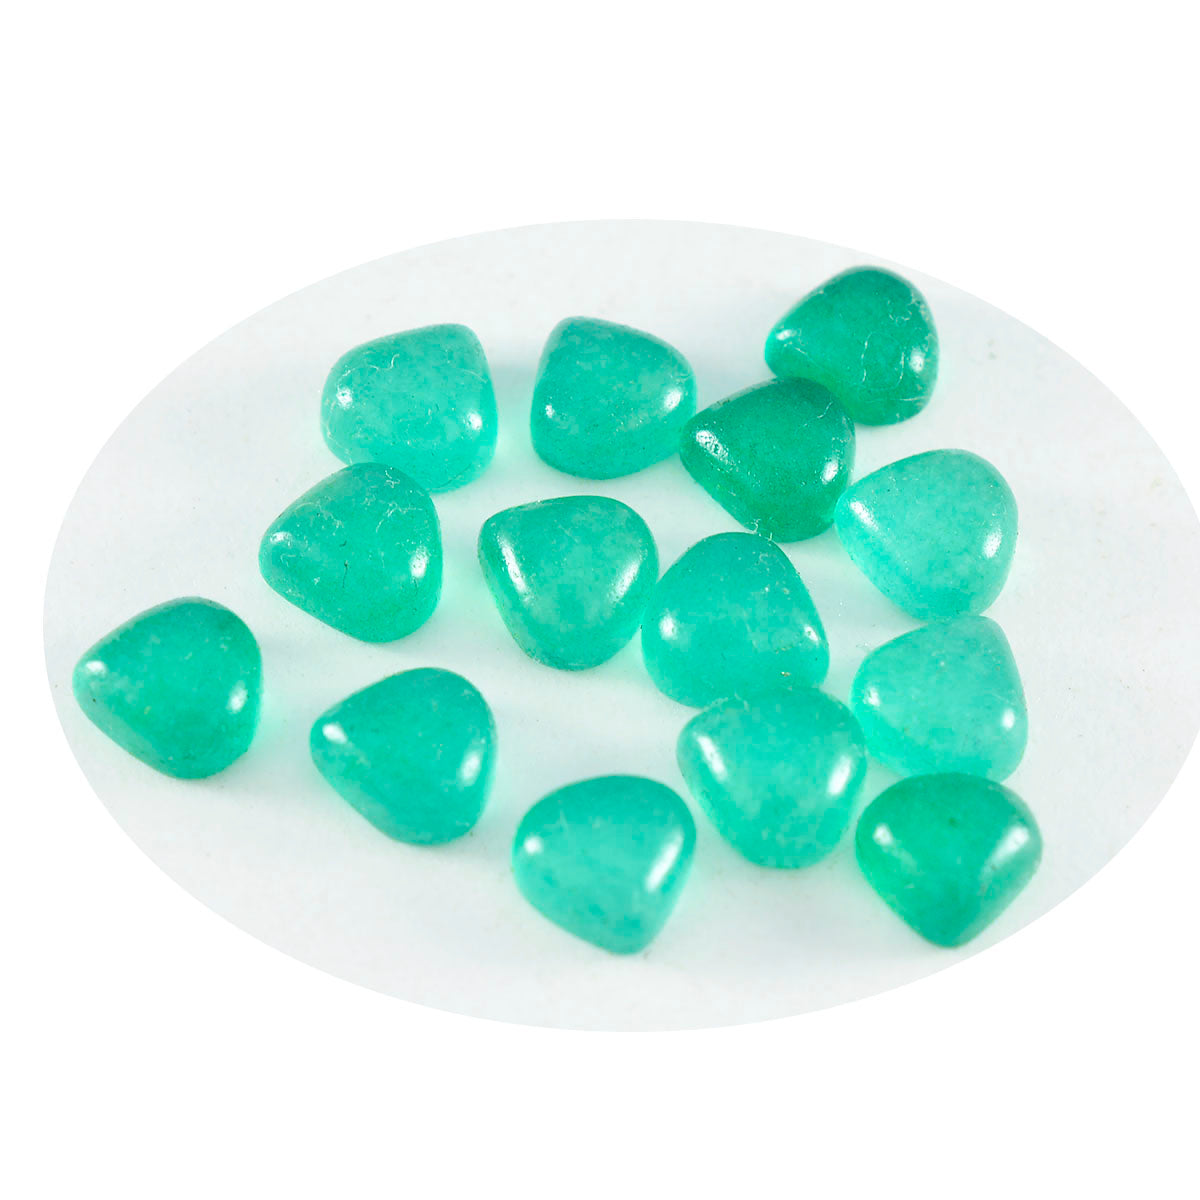 Riyogems 1PC Green Onyx Cabochon 5x5 mm Heart Shape astonishing Quality Loose Gems